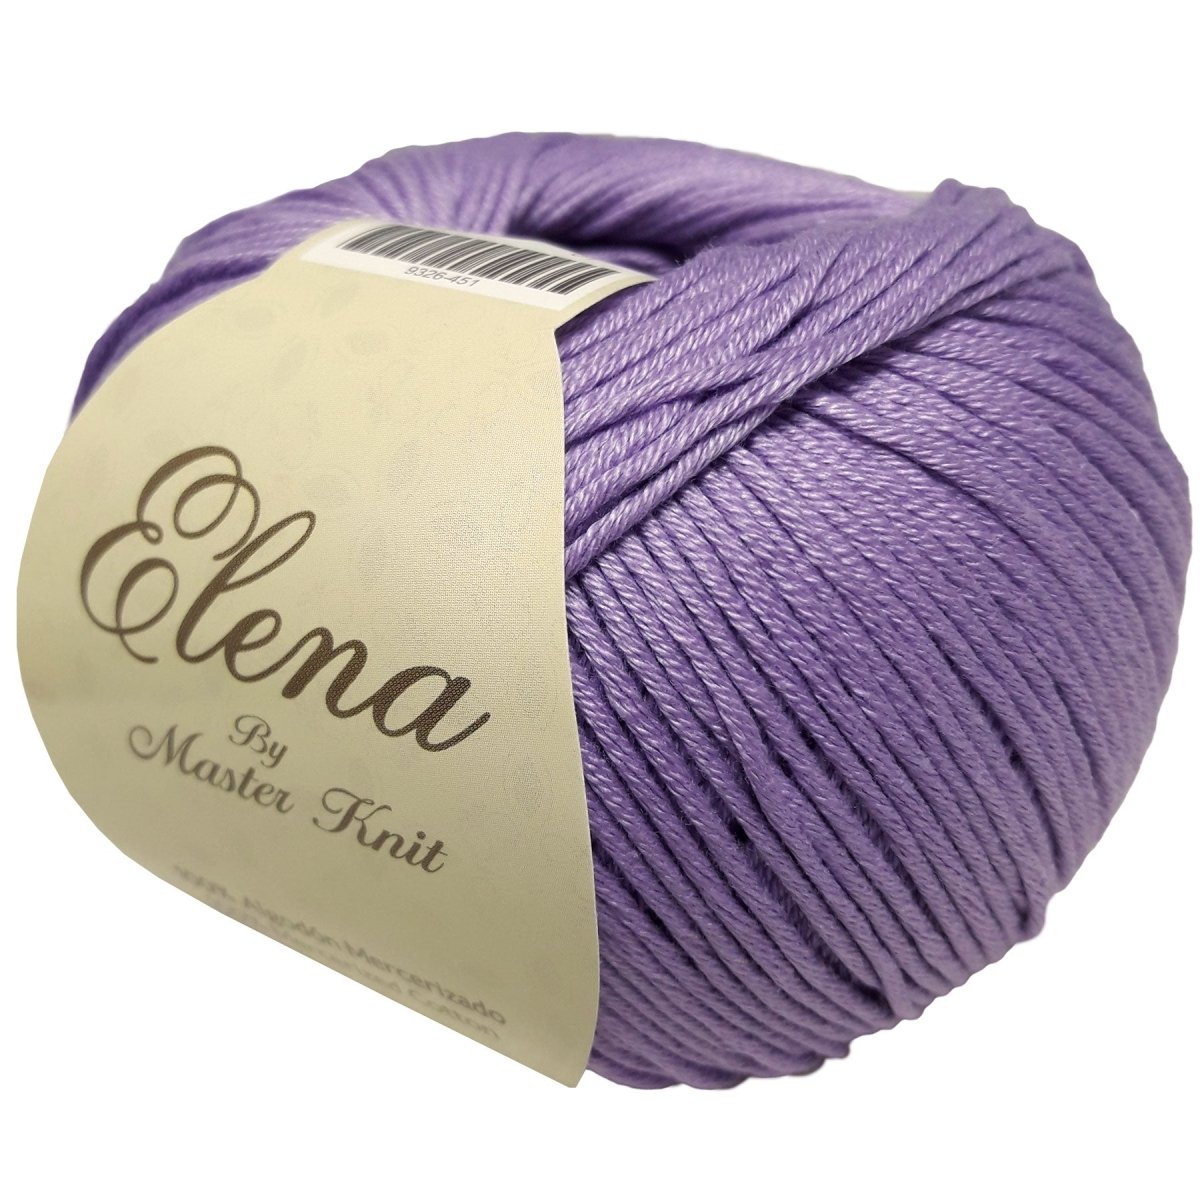 ELENA - Crochetstores9326-451745051438920